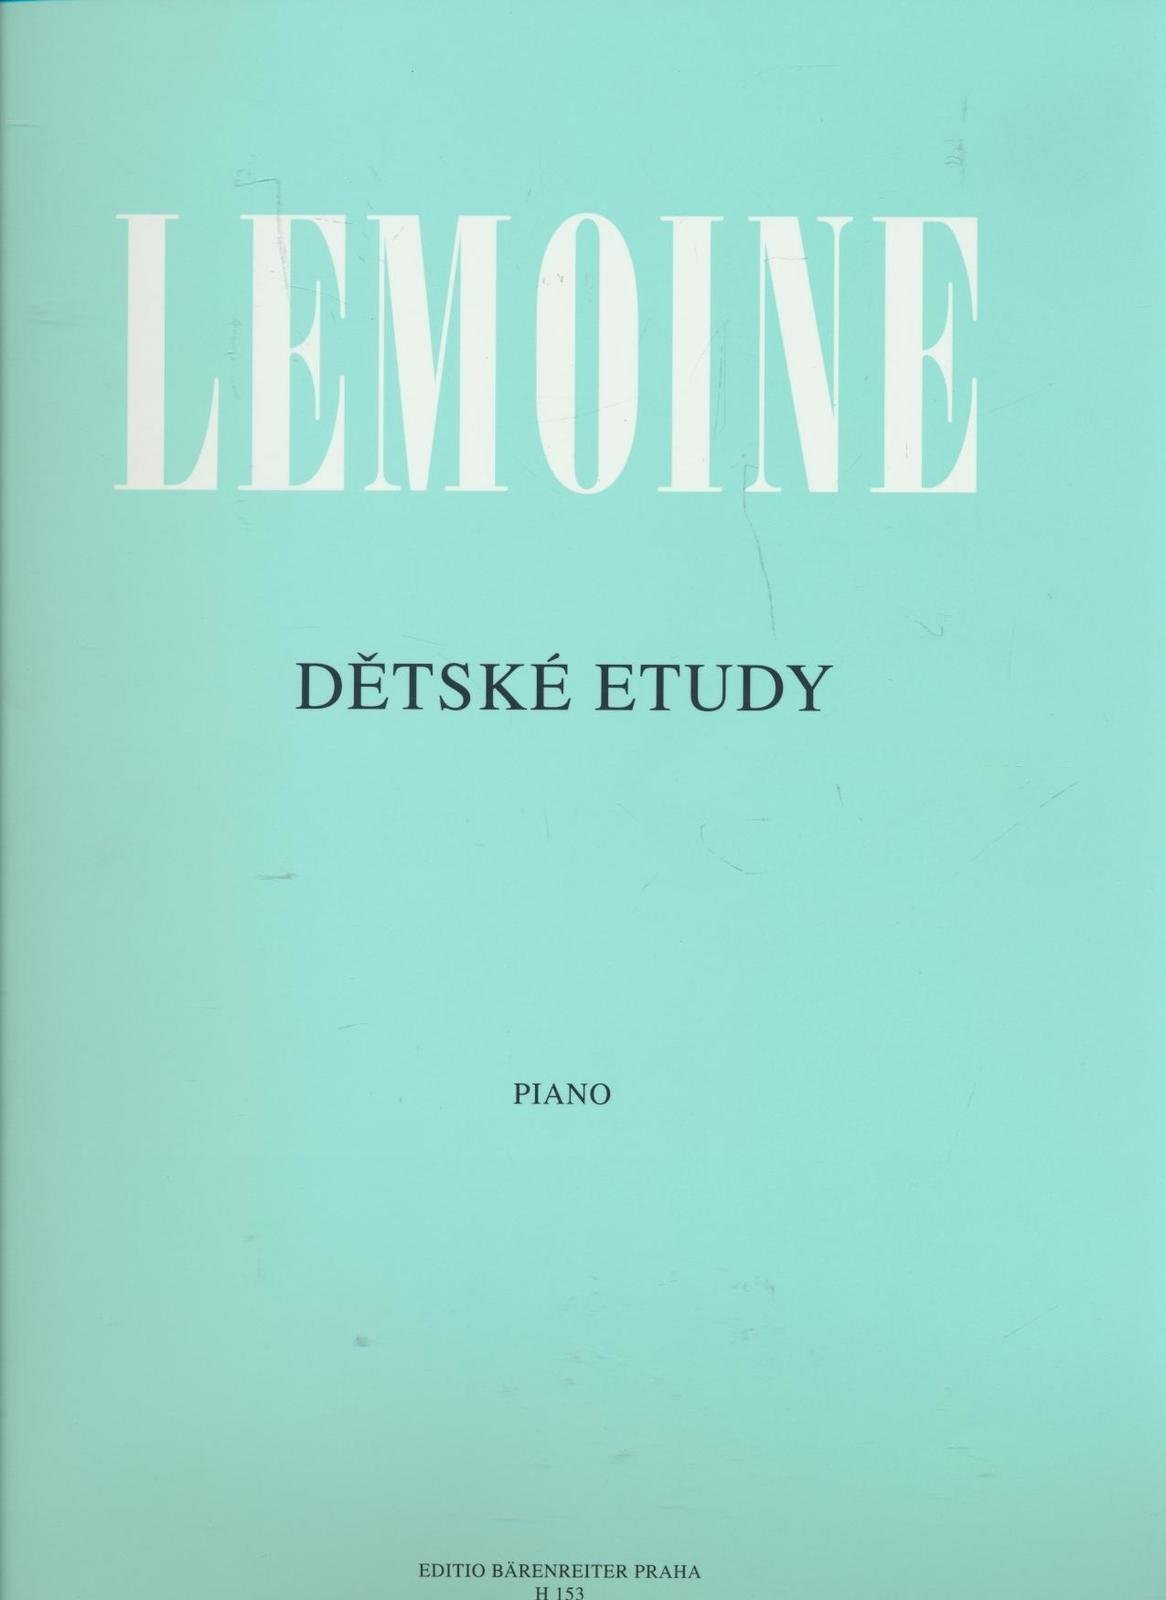 Music sheet for pianos Henri Lemoine Detské etudy op. 37